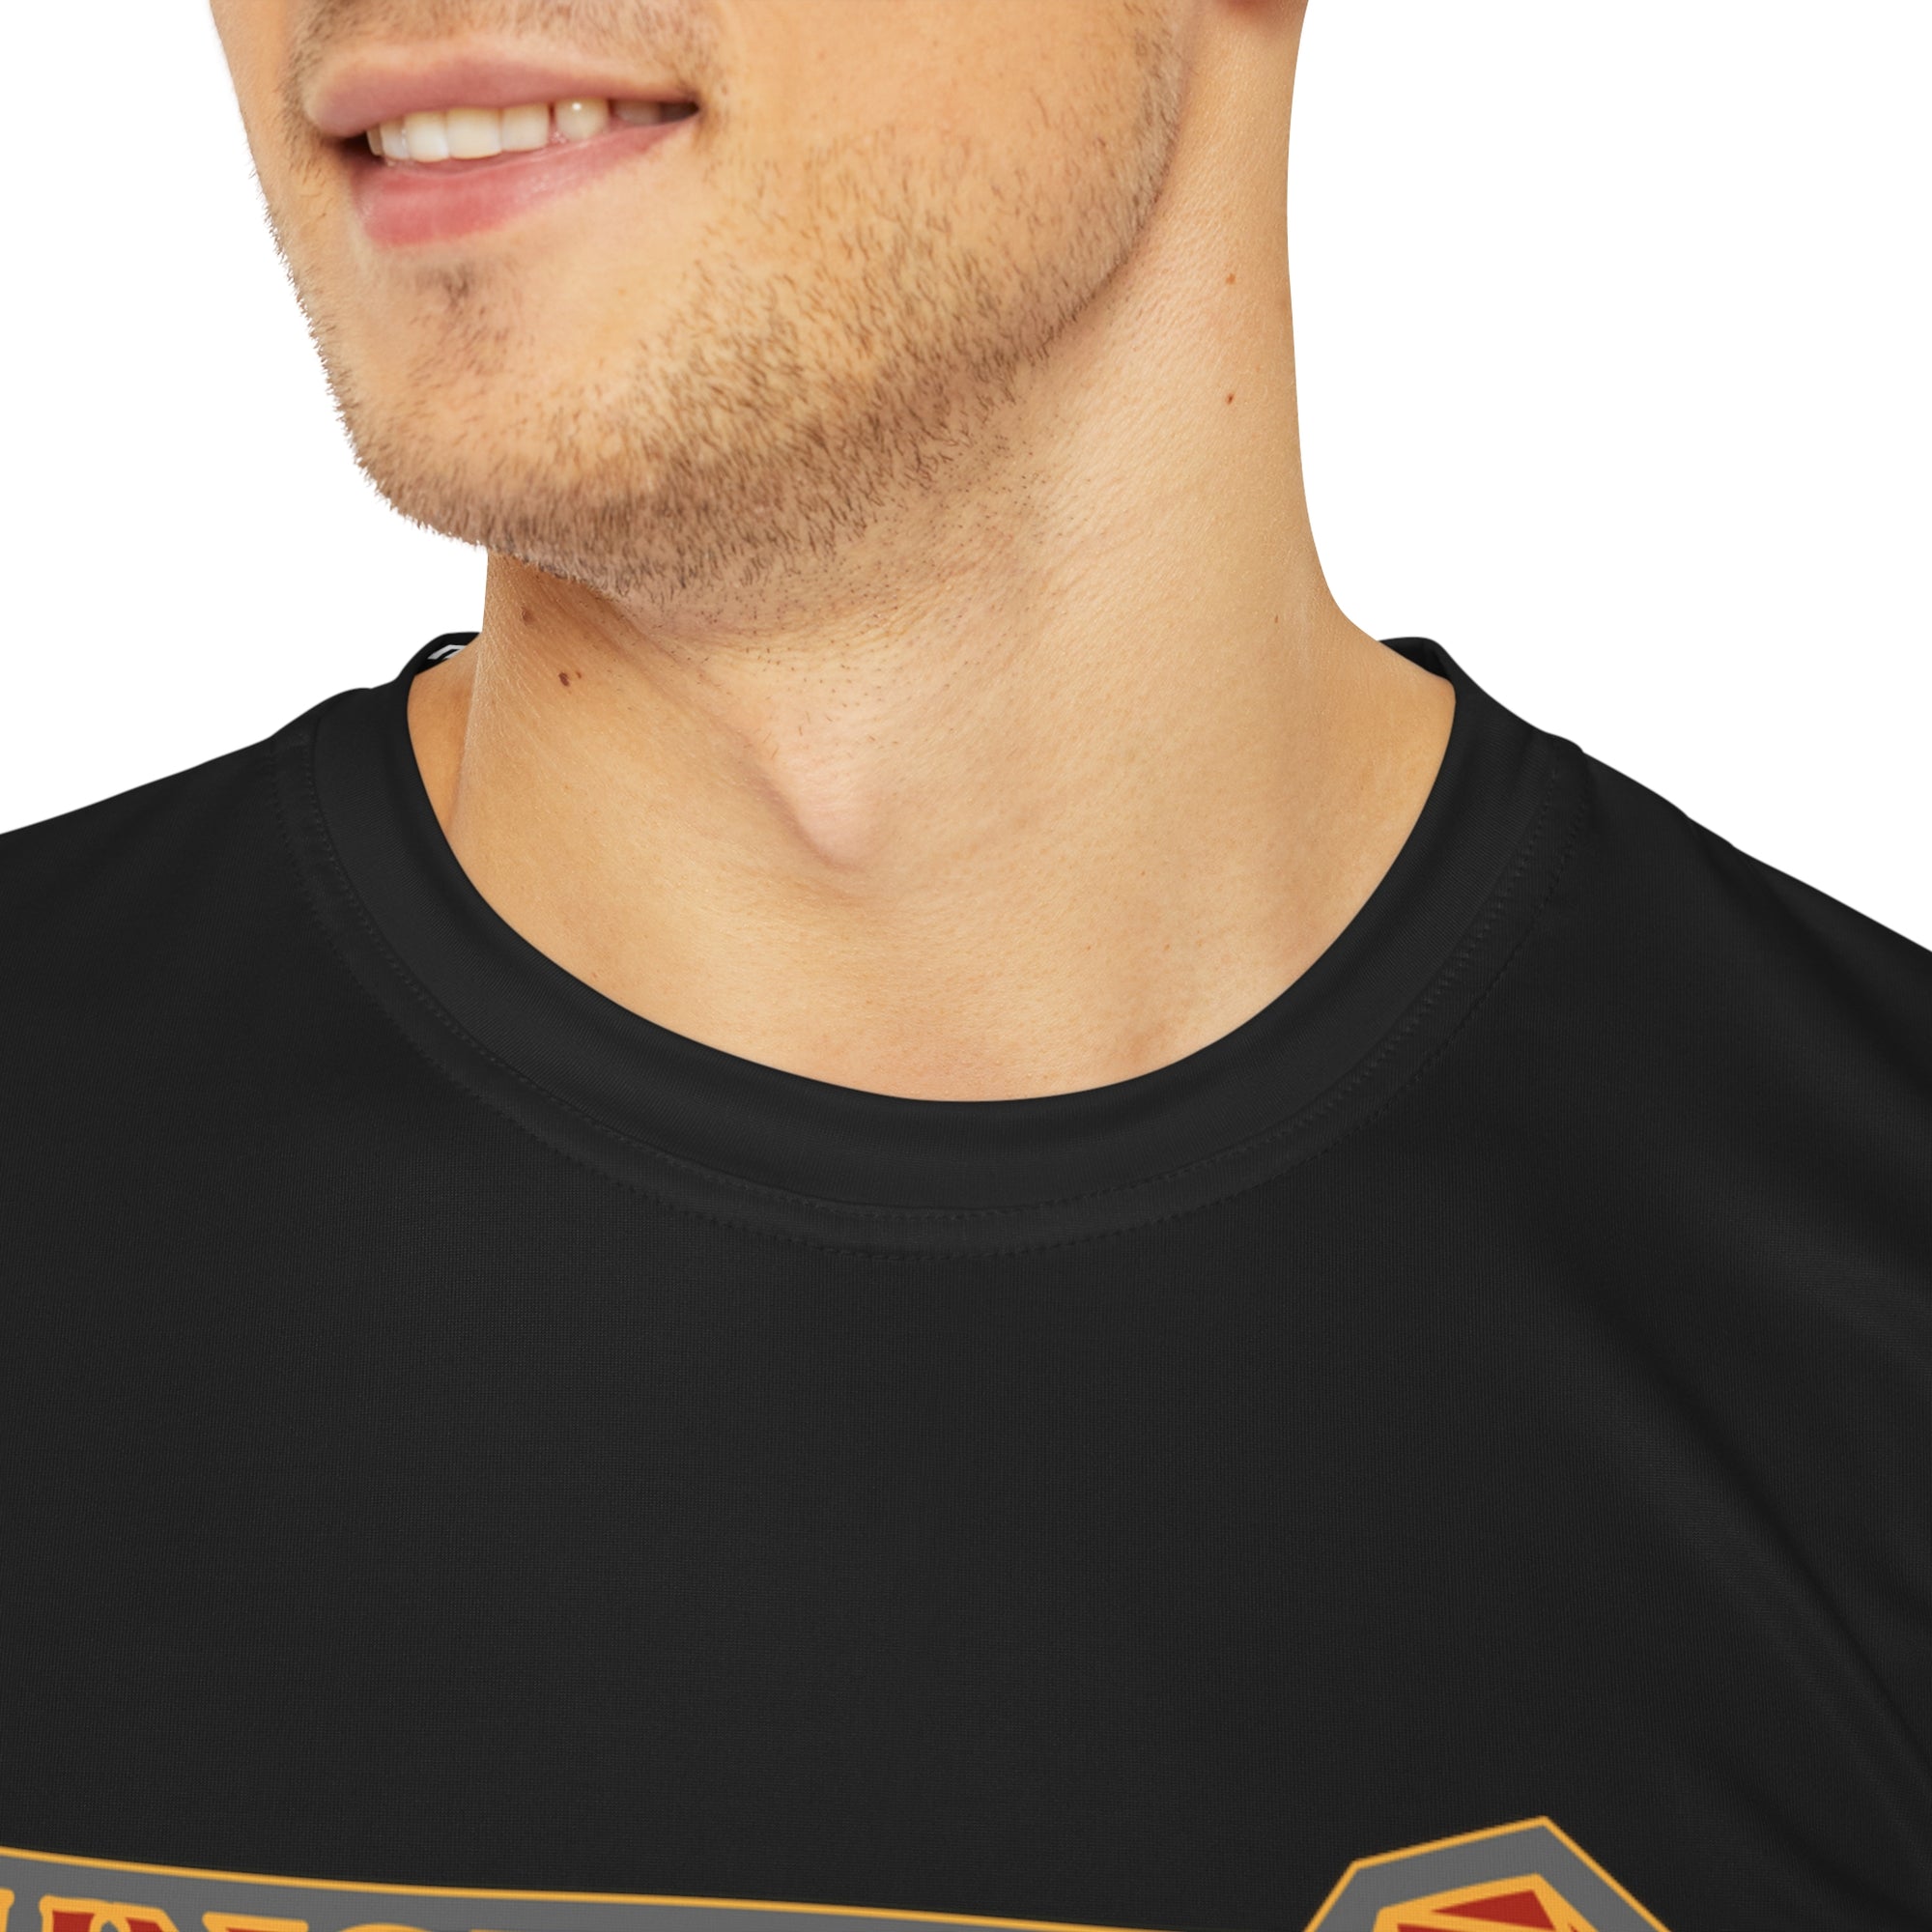 Dungeons &amp; Douchebags D &amp; D D20 Dice Nerd Fantasy Game Video Game Men&#39;s Polyester T Shirt Tee Tshirt T-shirt Shirt By Mythical Merch